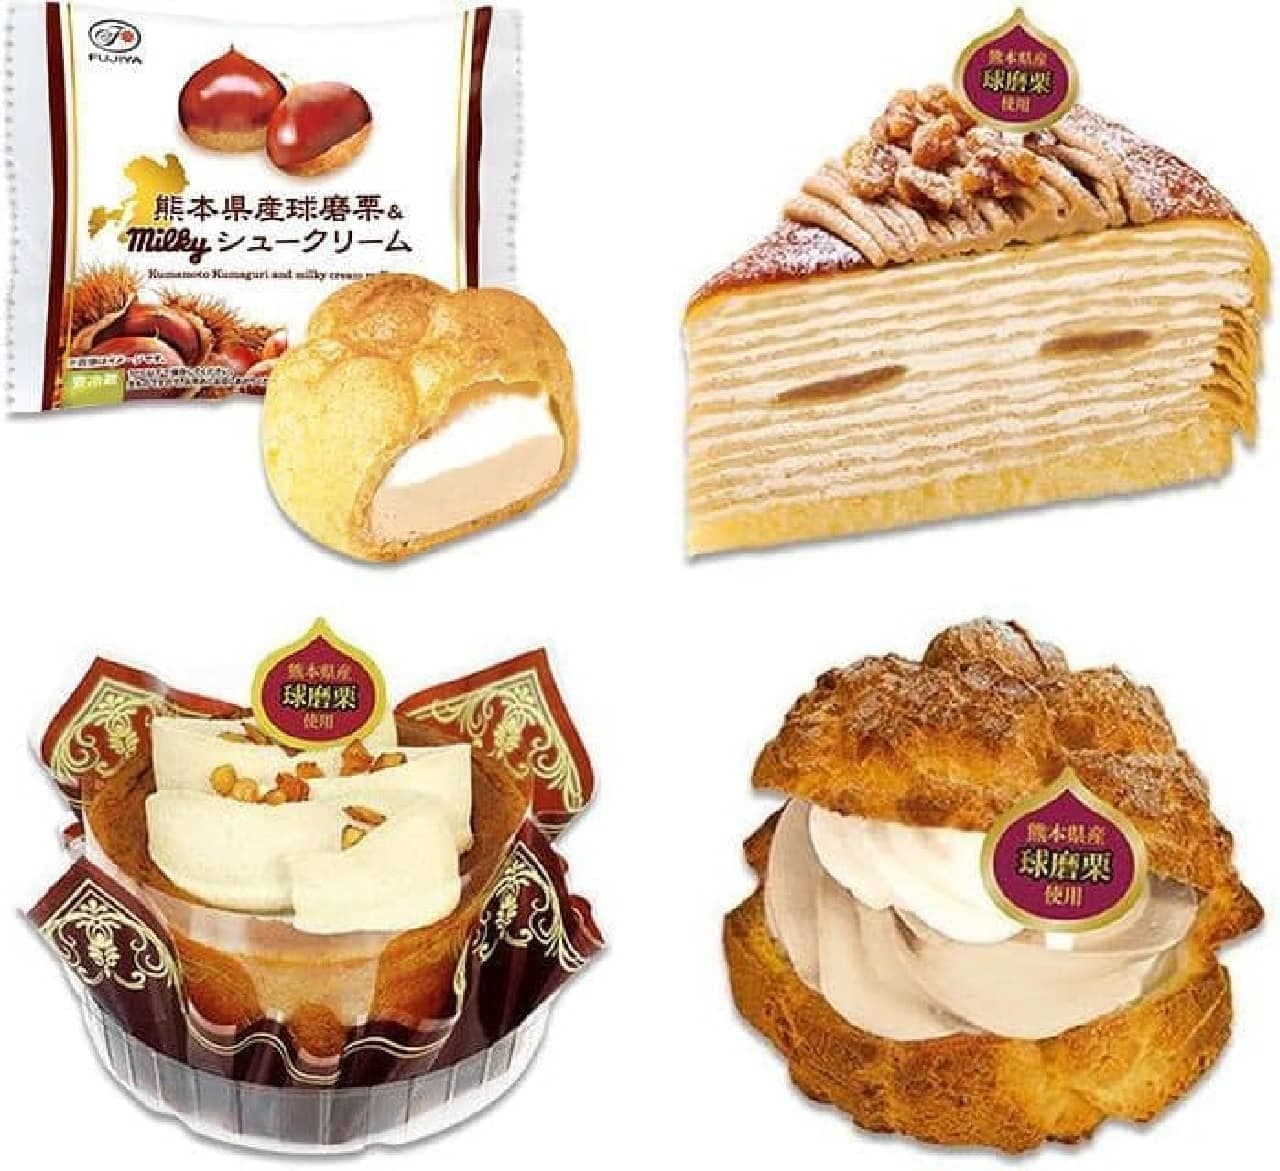 4 kinds of sweets using Fujiya "Kumamoto Prefecture Kuma chestnut"